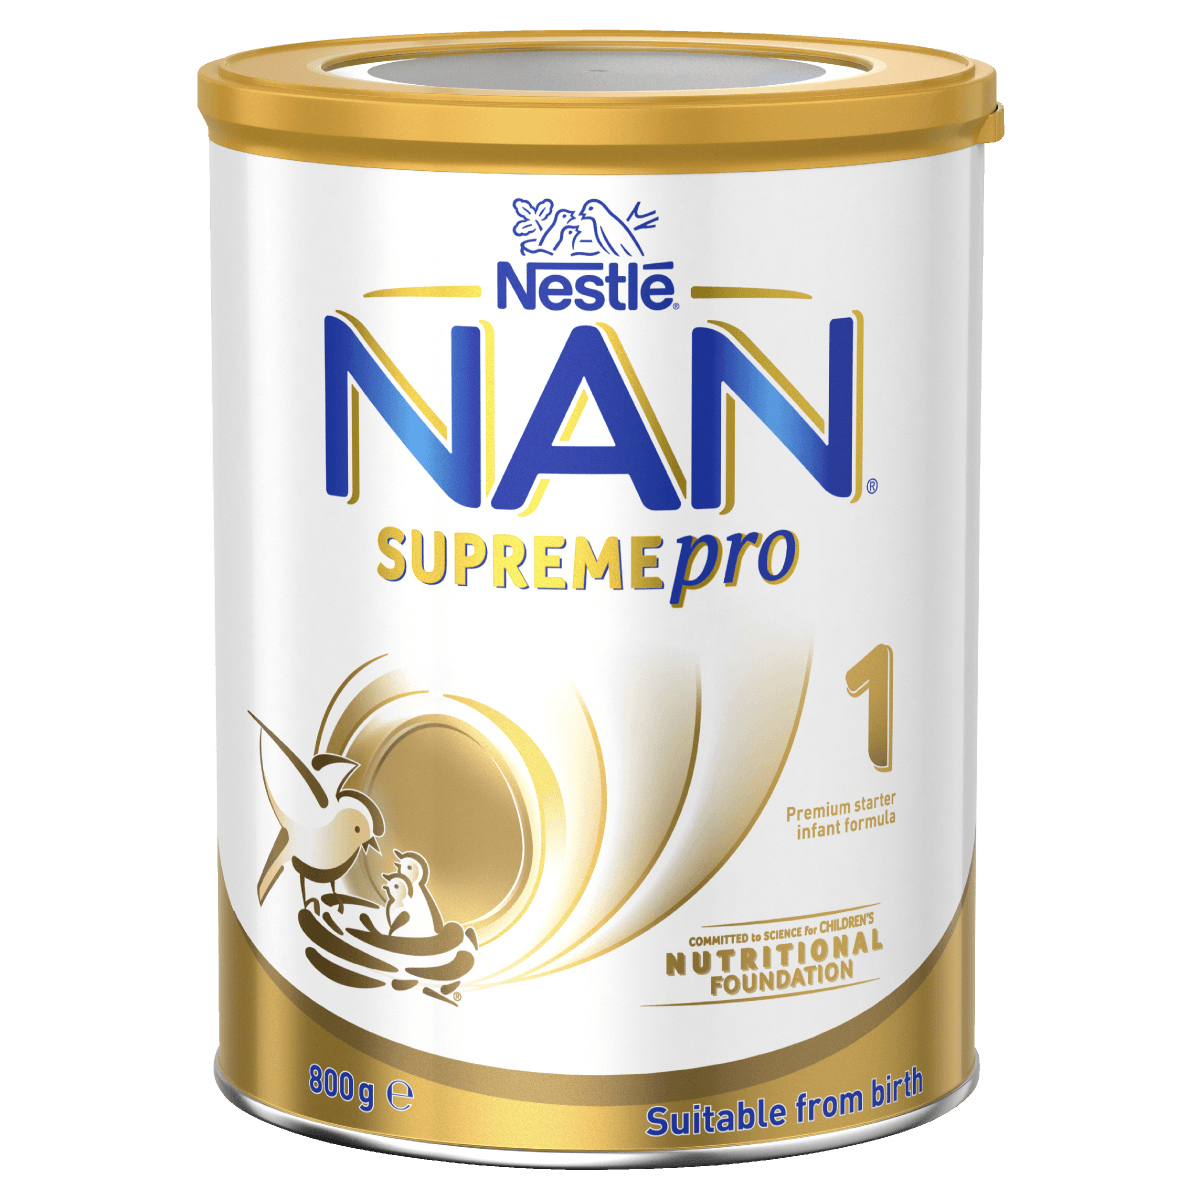 Nestlé NAN SUPREMEpro 1 From Birth Premium Starter Formula Powder 800g